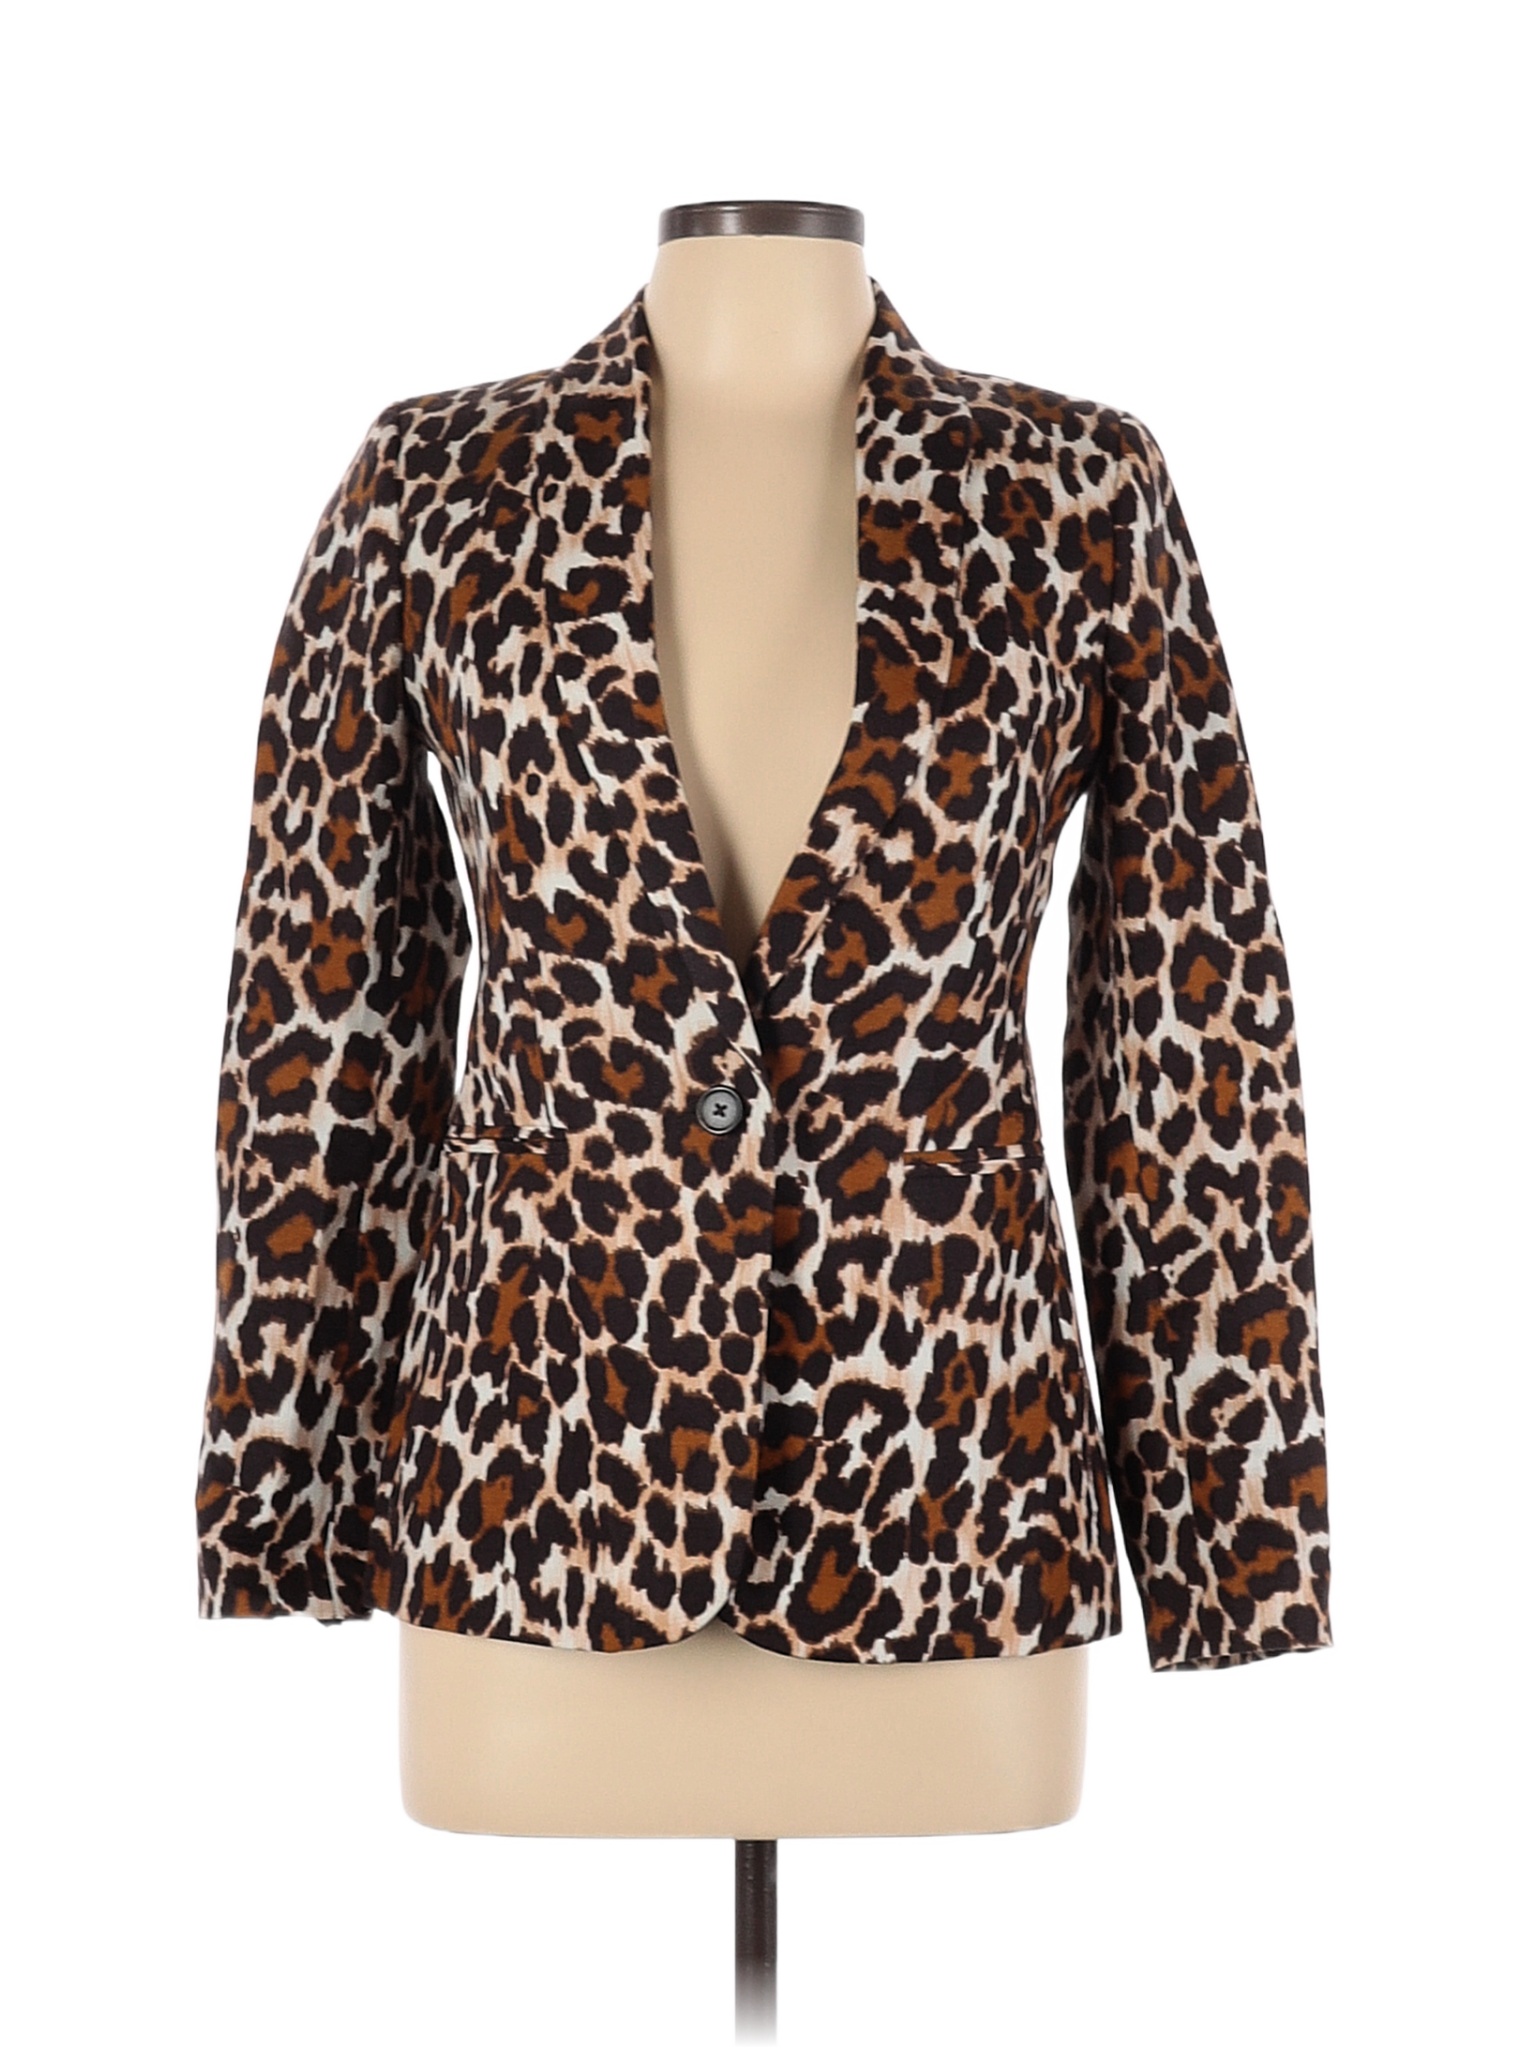 J.Crew Animal Print Leopard Print Brown Blazer Size 2 - 76% off | thredUP